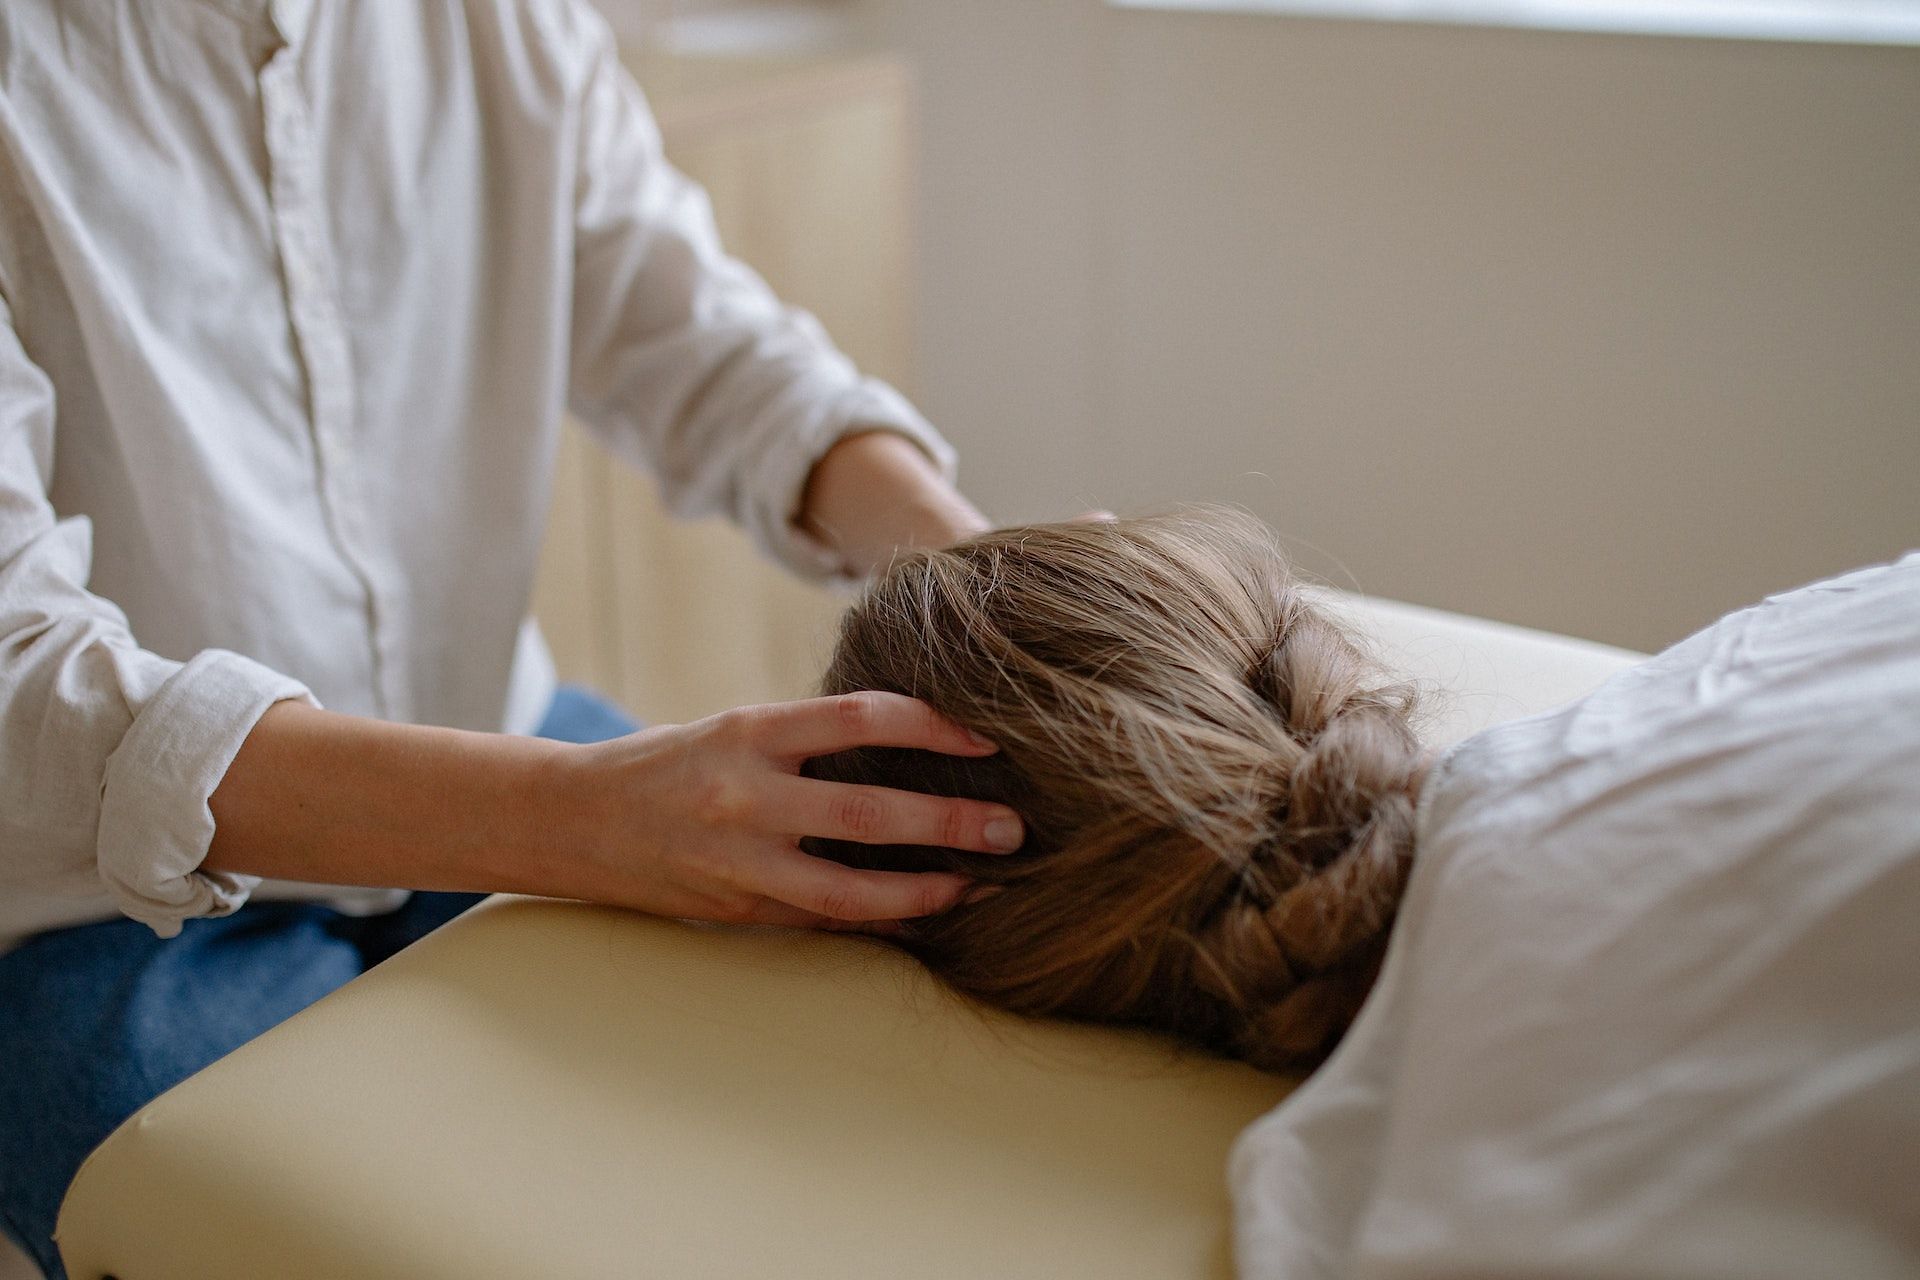 Massaging the scalp stimulates hair growth. (Photo via Pexels/Yan Krukau)